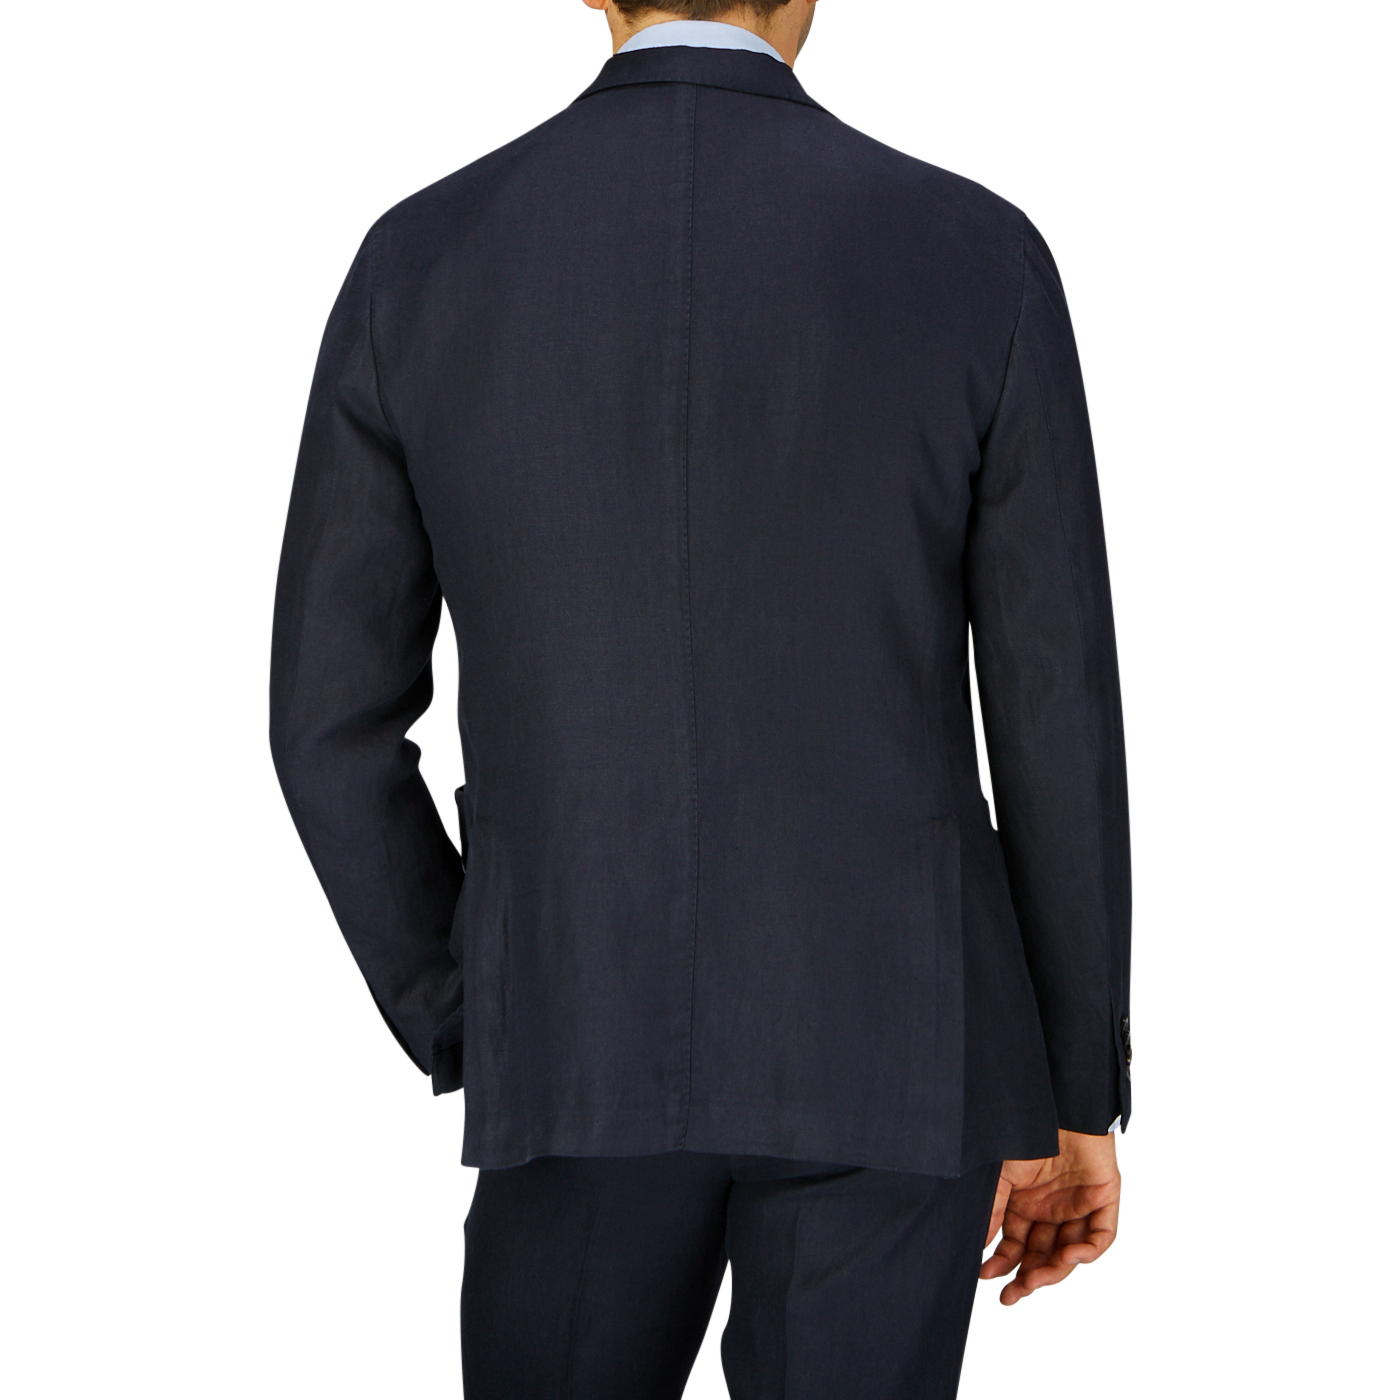 Rear view of a person wearing a Navy Blue Washed Irish Linen Boglioli K Jacket.